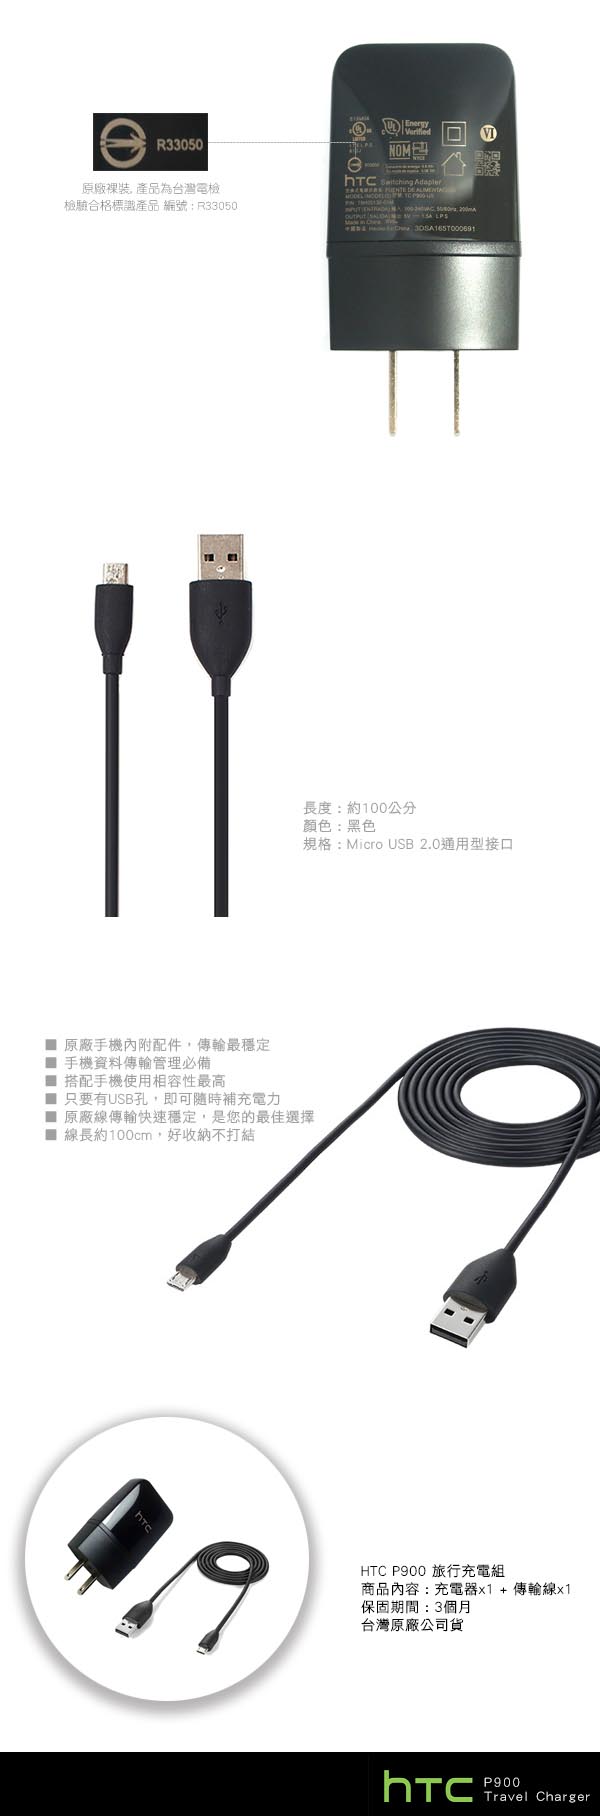 HTC P900原廠旅行充電器+M410傳輸充電線組 (台灣原廠公司貨-密封袋包裝)